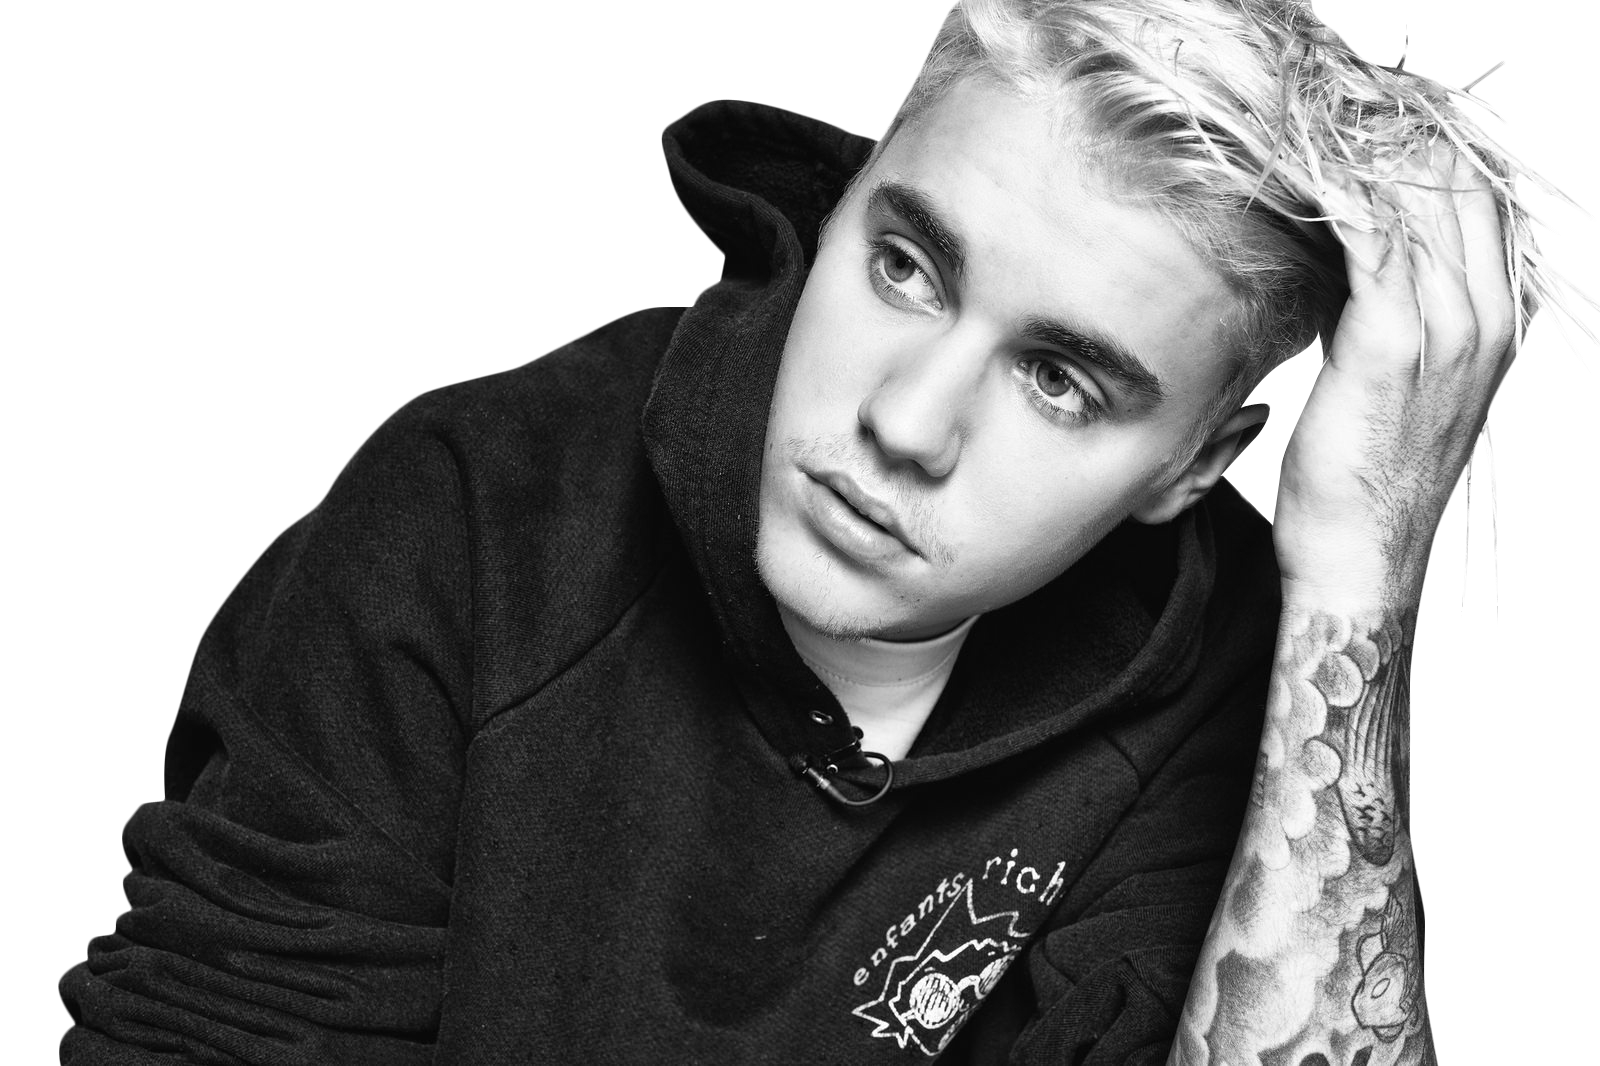 Download Justin Bieber Black & White PNG Image for Free